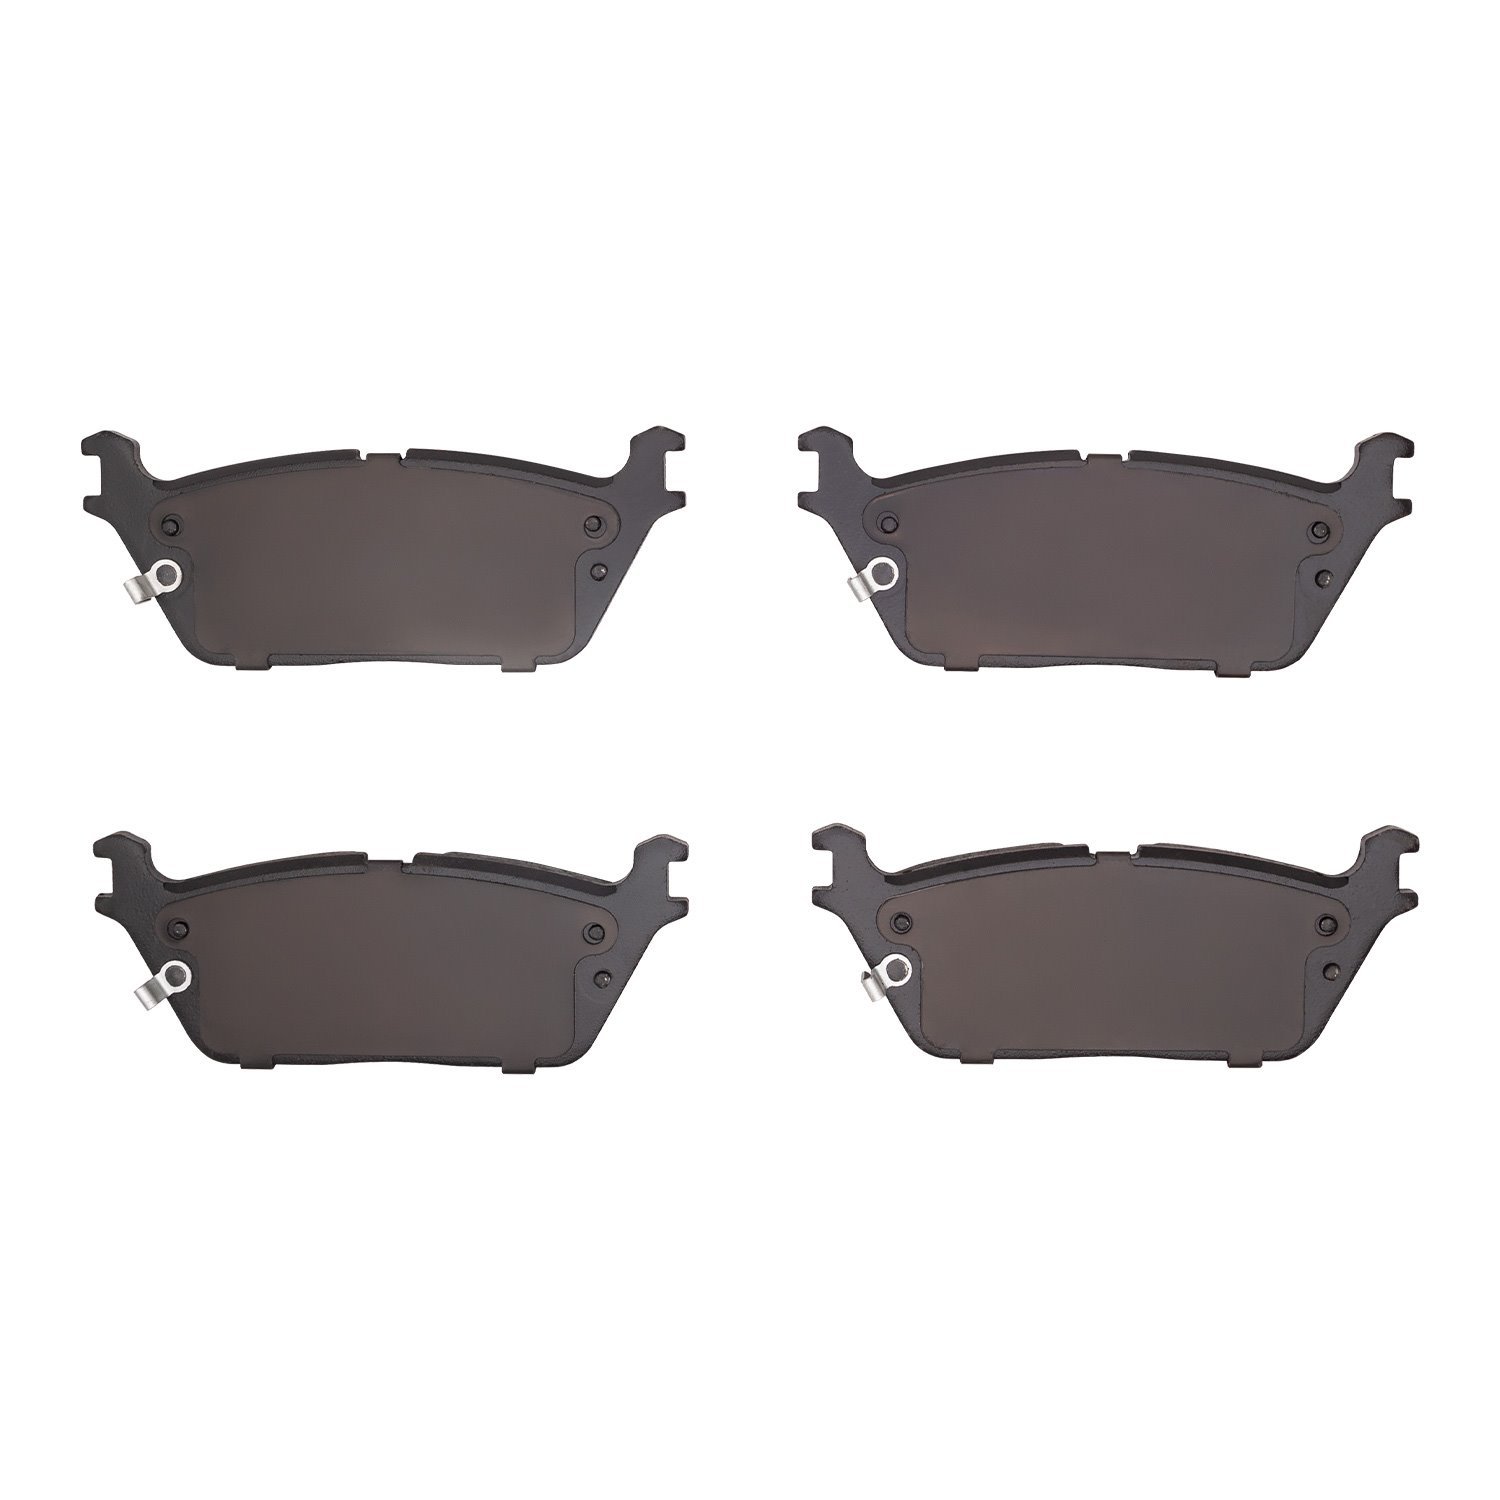 1551-2169-00 5000 Advanced Ceramic Brake Pads, Fits Select Mopar, Position: Rear